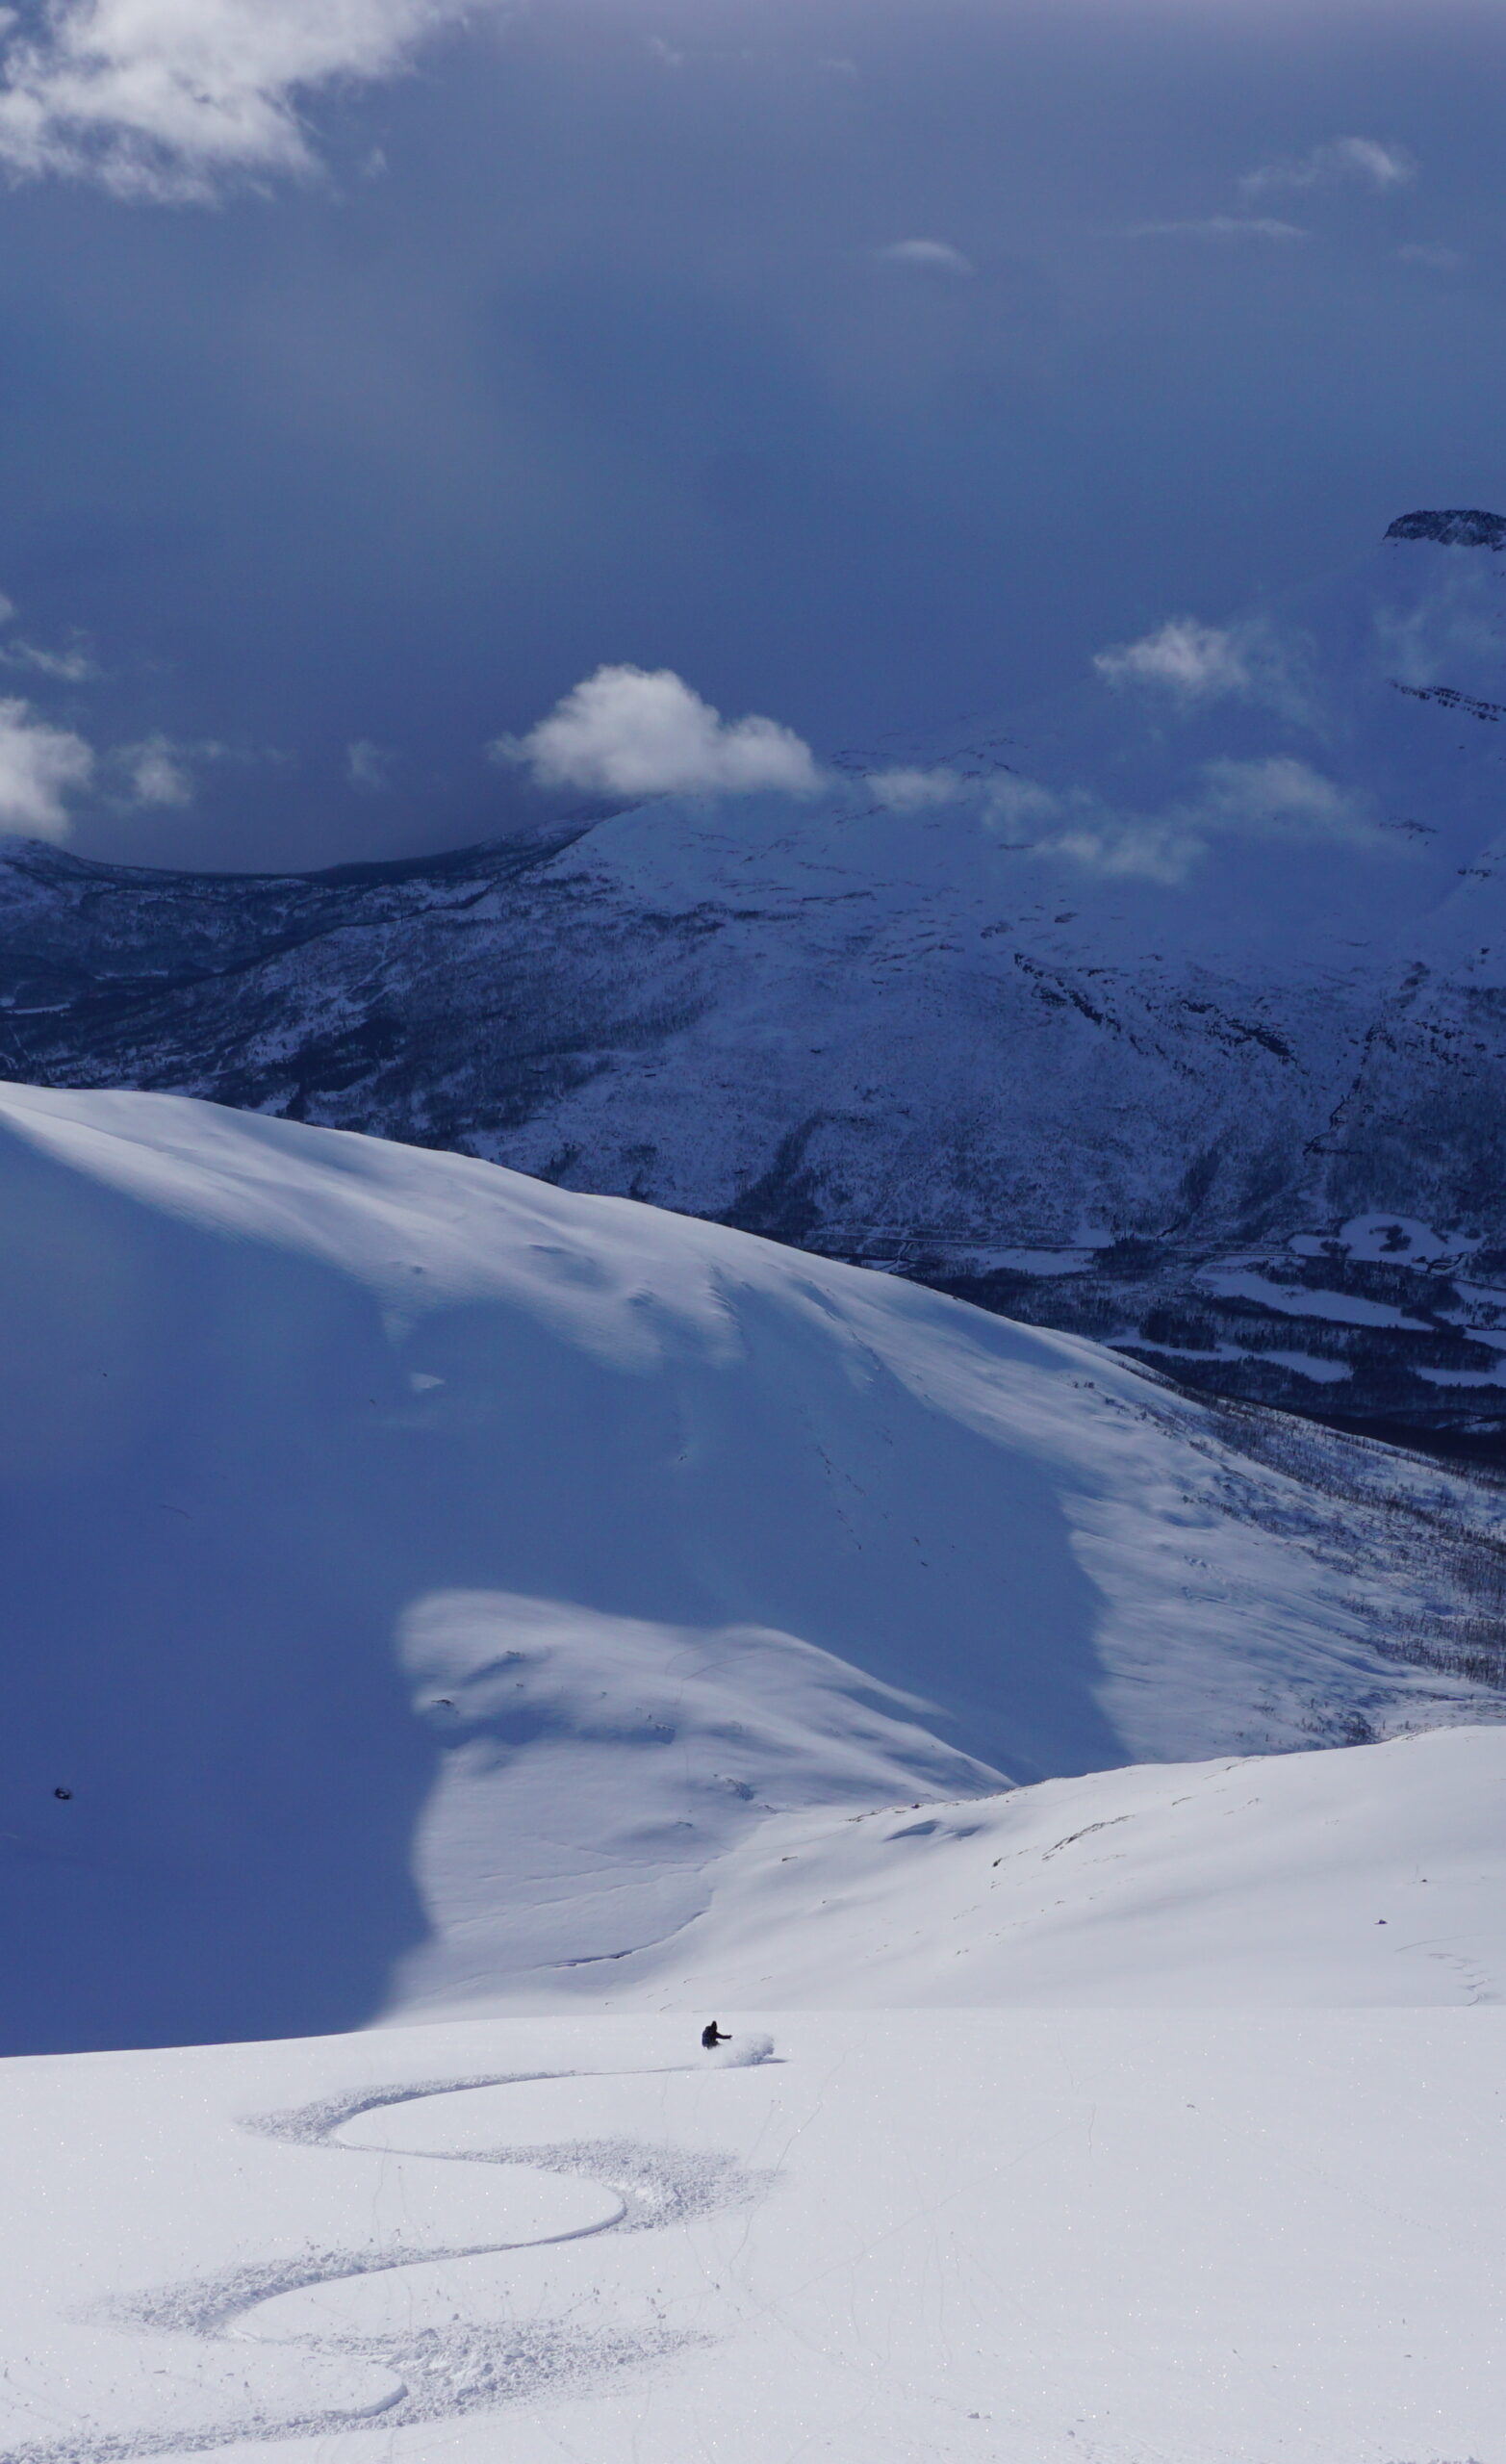 Snowboarding down the North ridge of Midteraksia